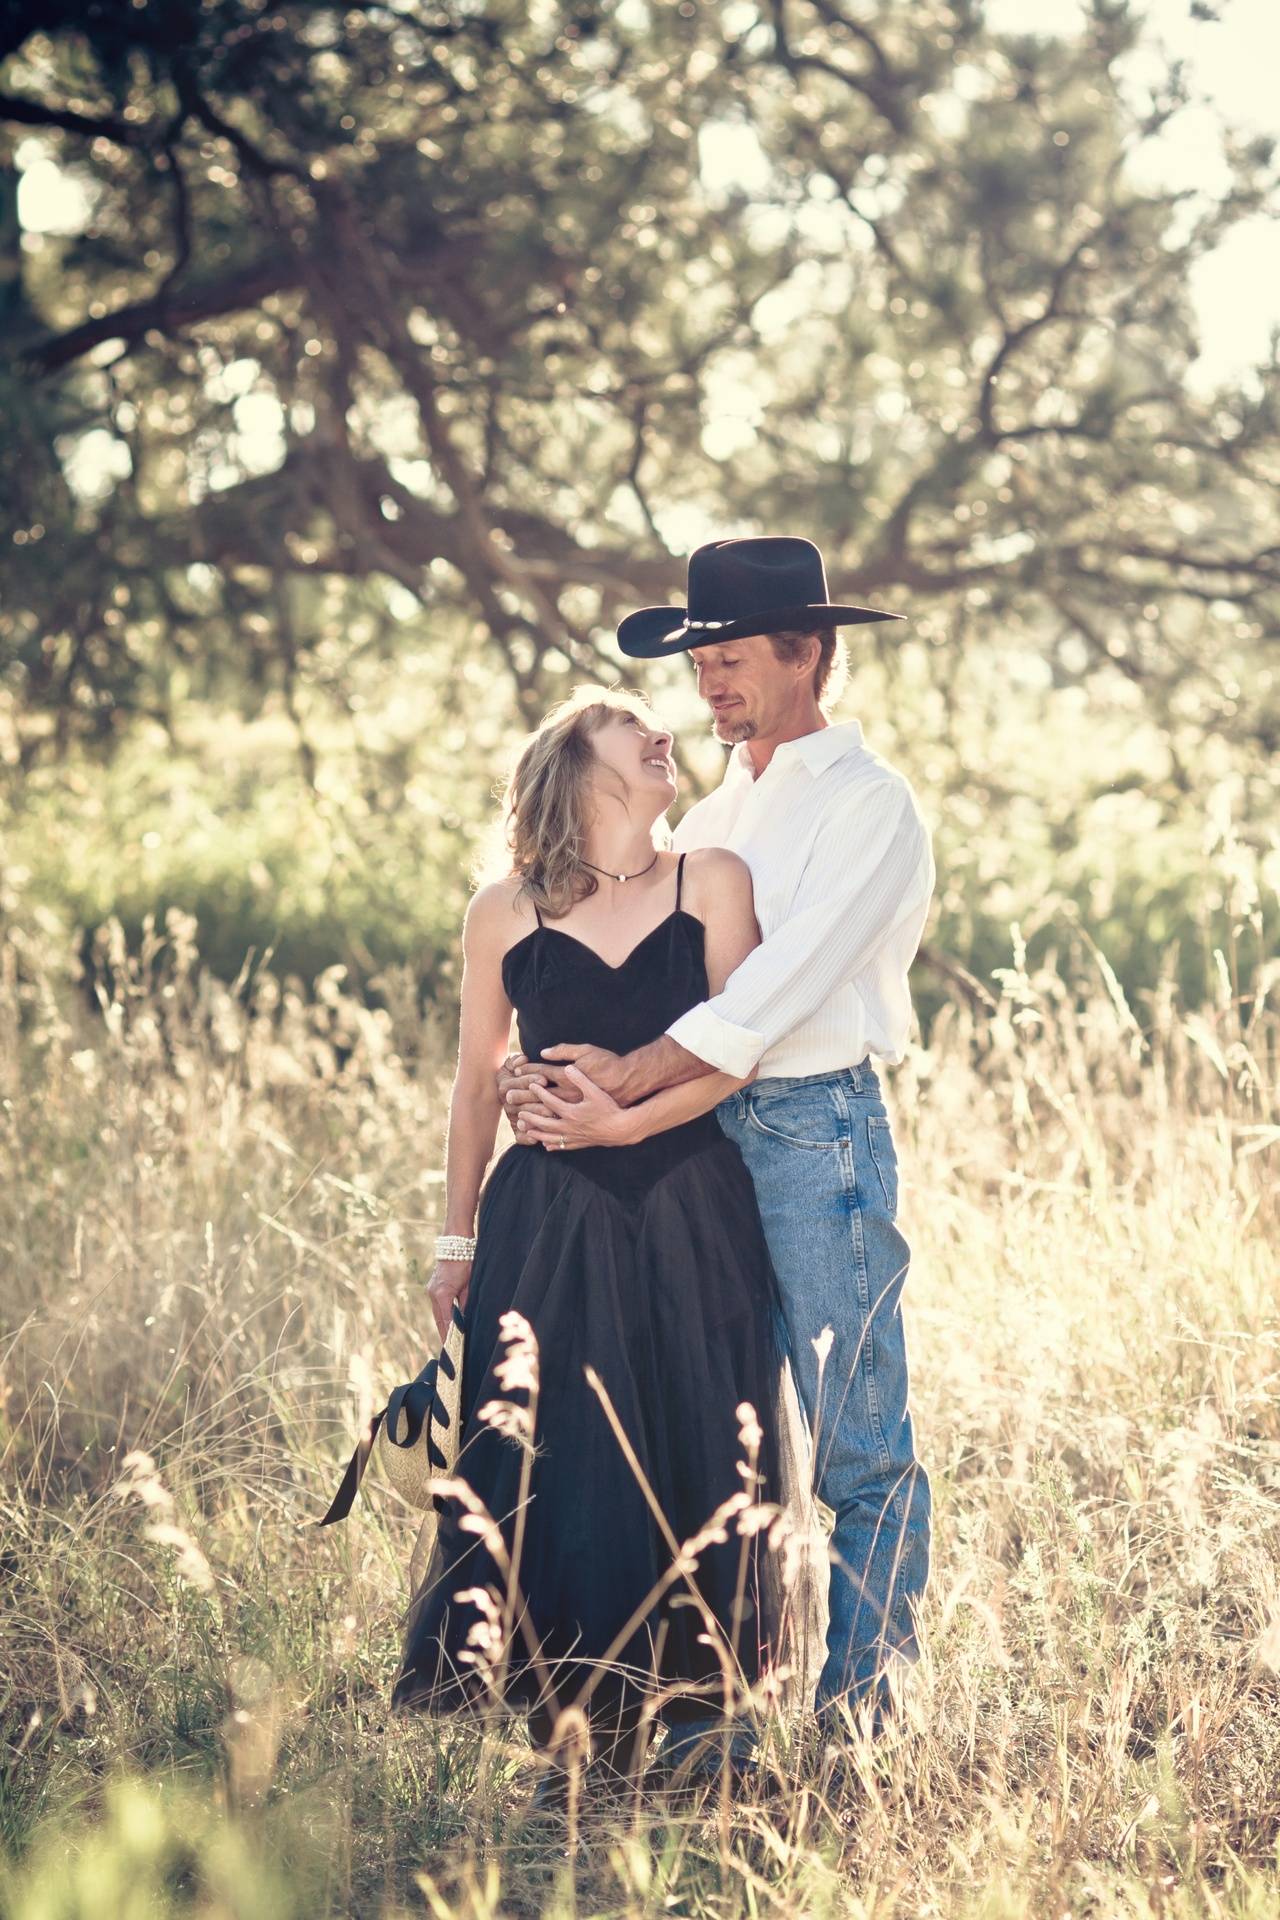 The Farmer & His girl